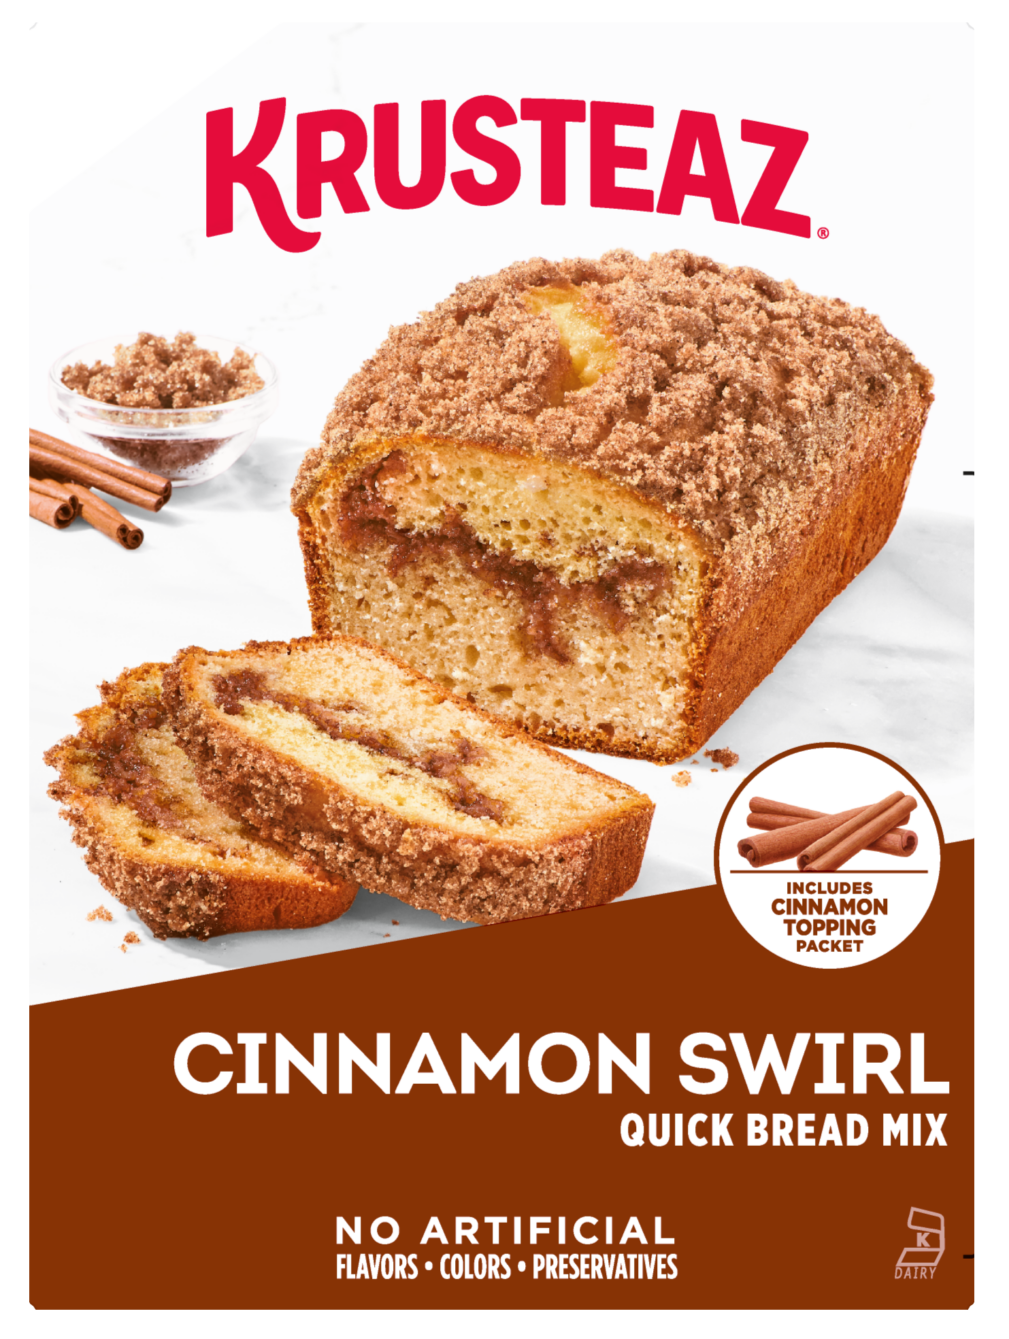 Box of Krusteaz Cinnamon Swirl Quick Bread Mix.